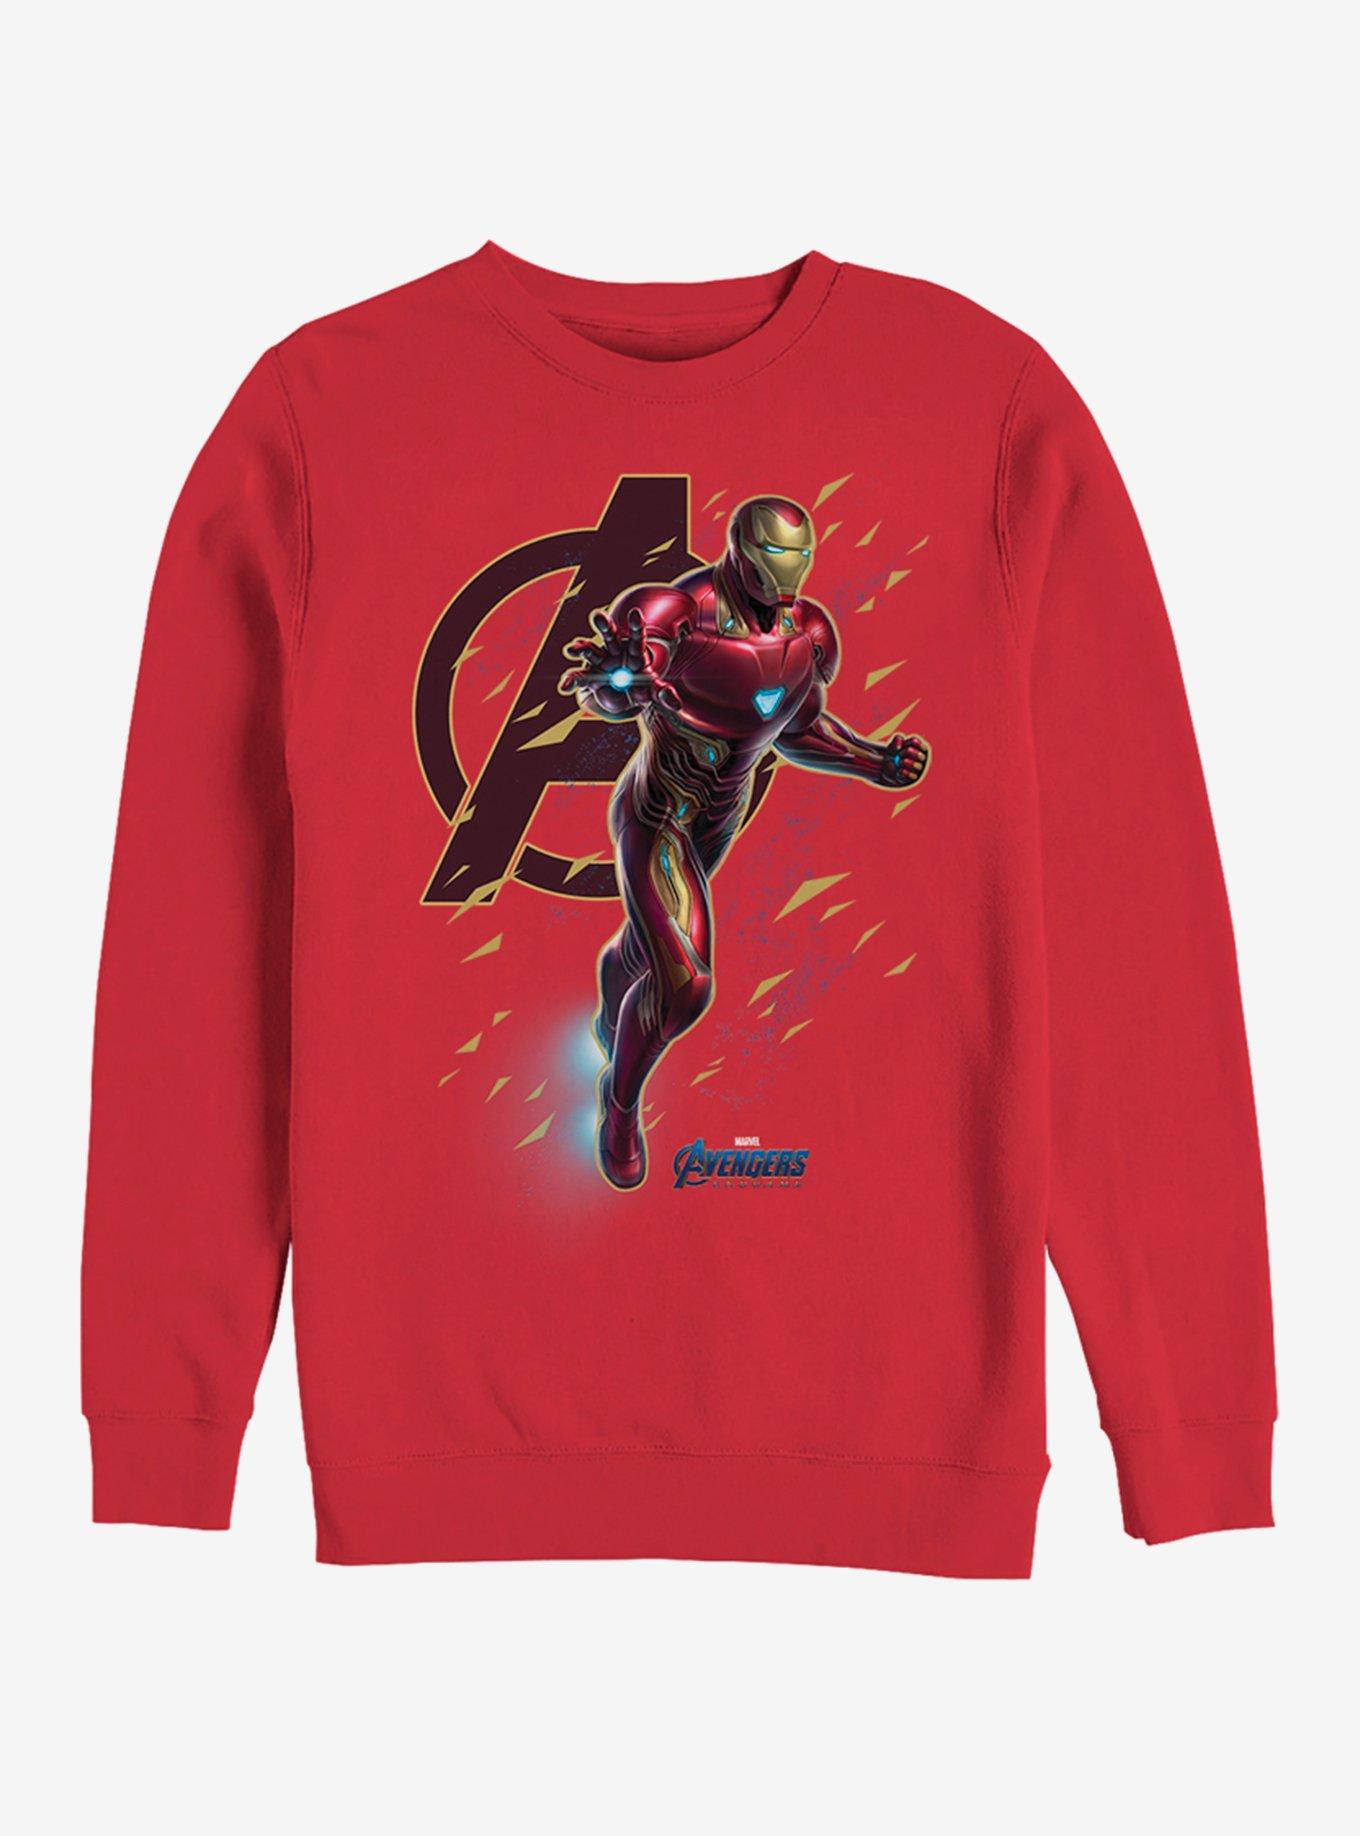 Marvel Avengers: Endgame Suit Flies Red Sweatshirt